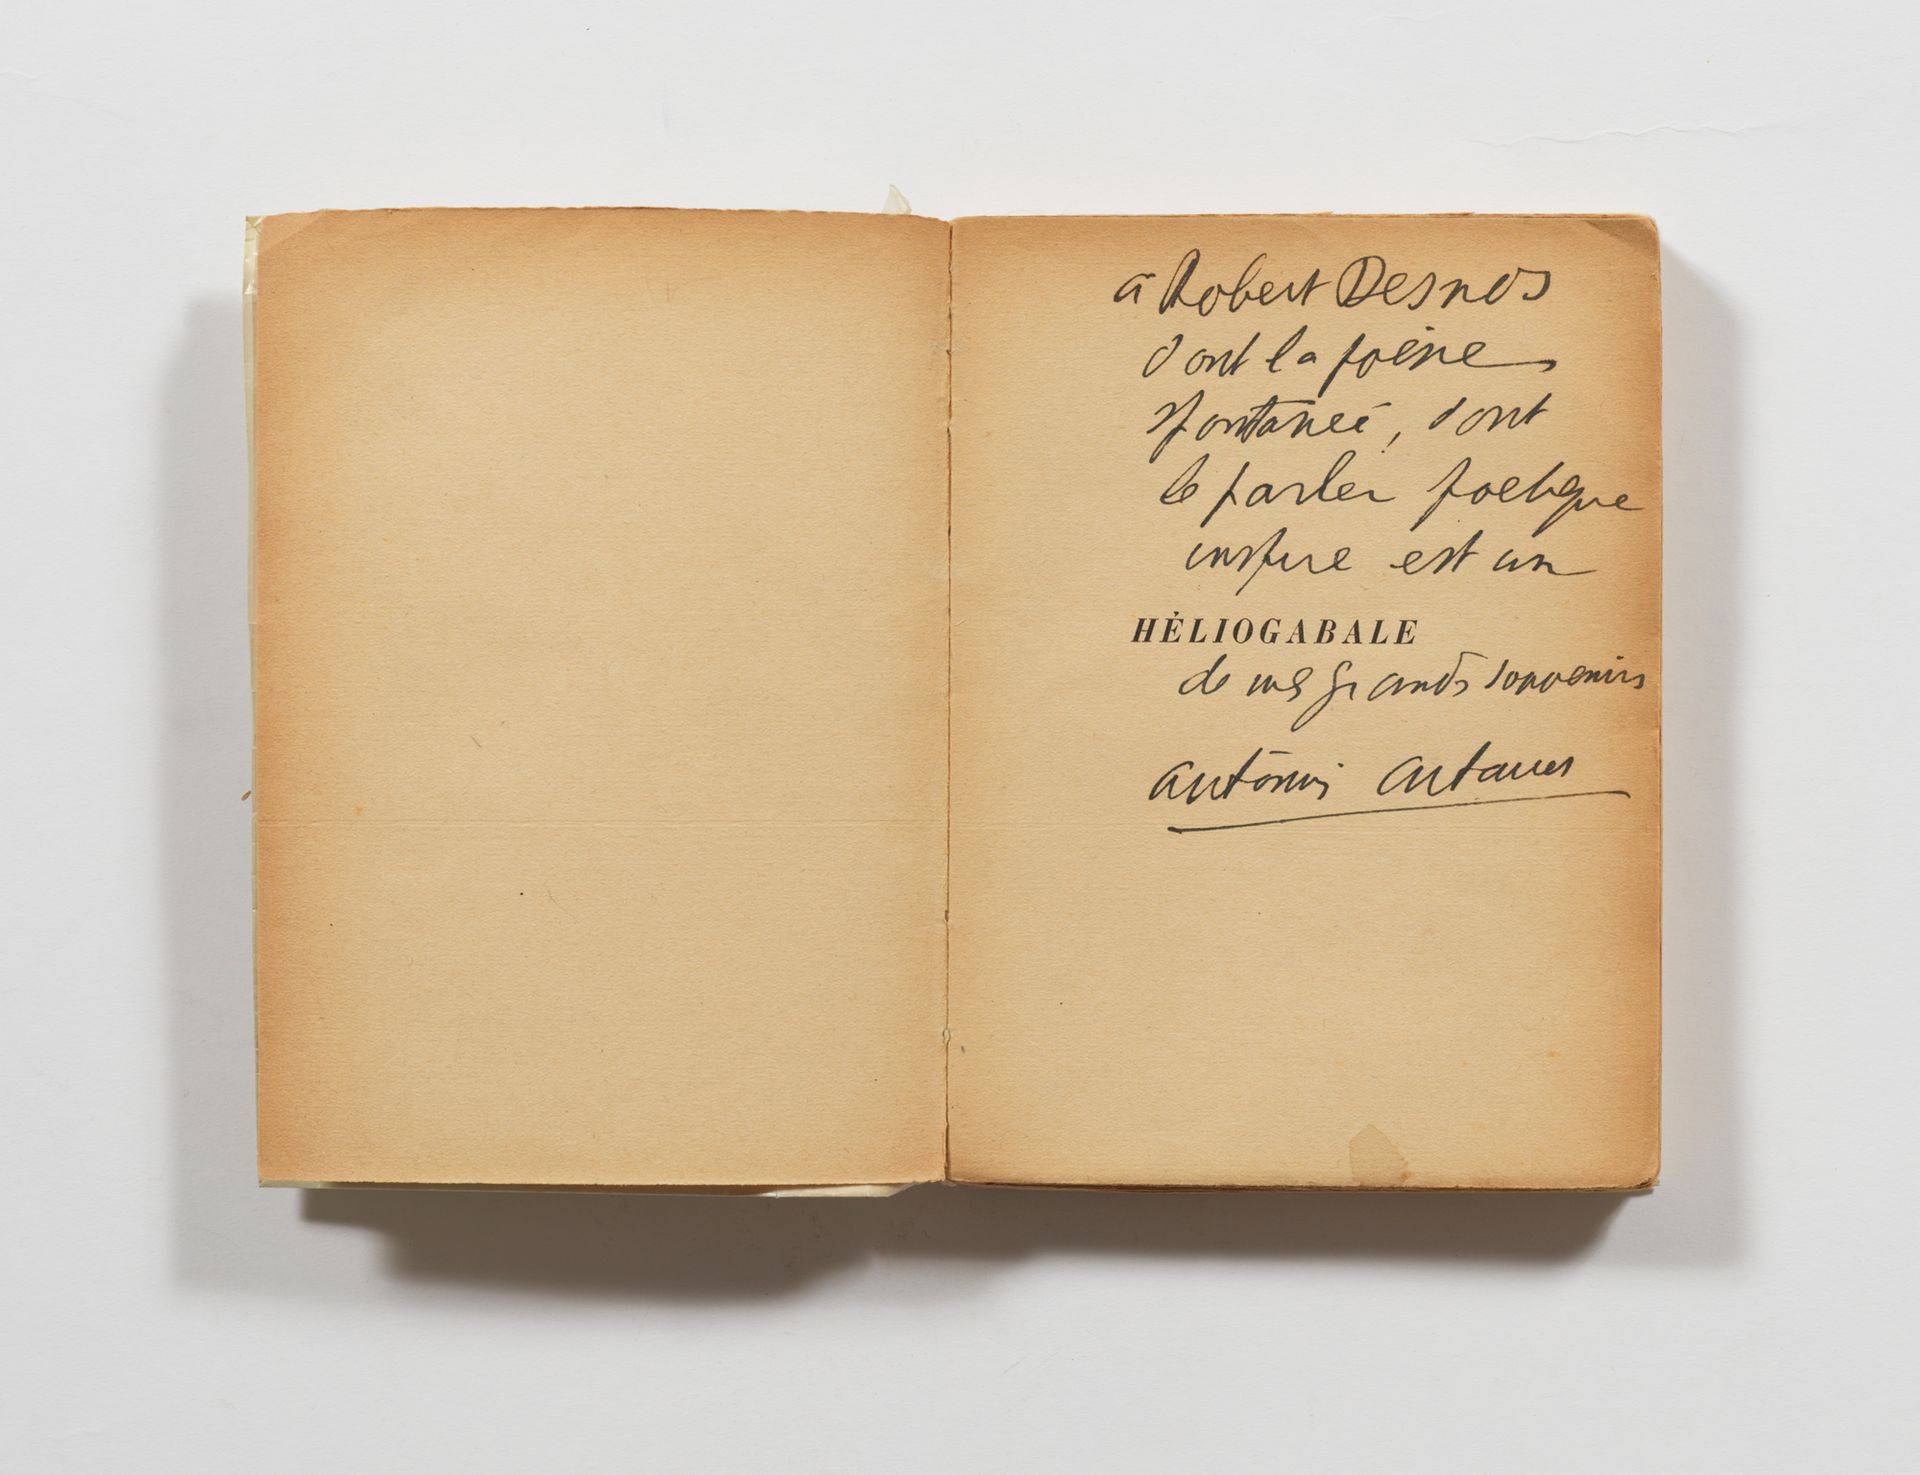 ARTAUD Antonin. Heliogabalus.巴黎，Denoël et Steele, 1934。8开本，平装本。
第一版。
亲笔签名信："致罗伯特&hellip;